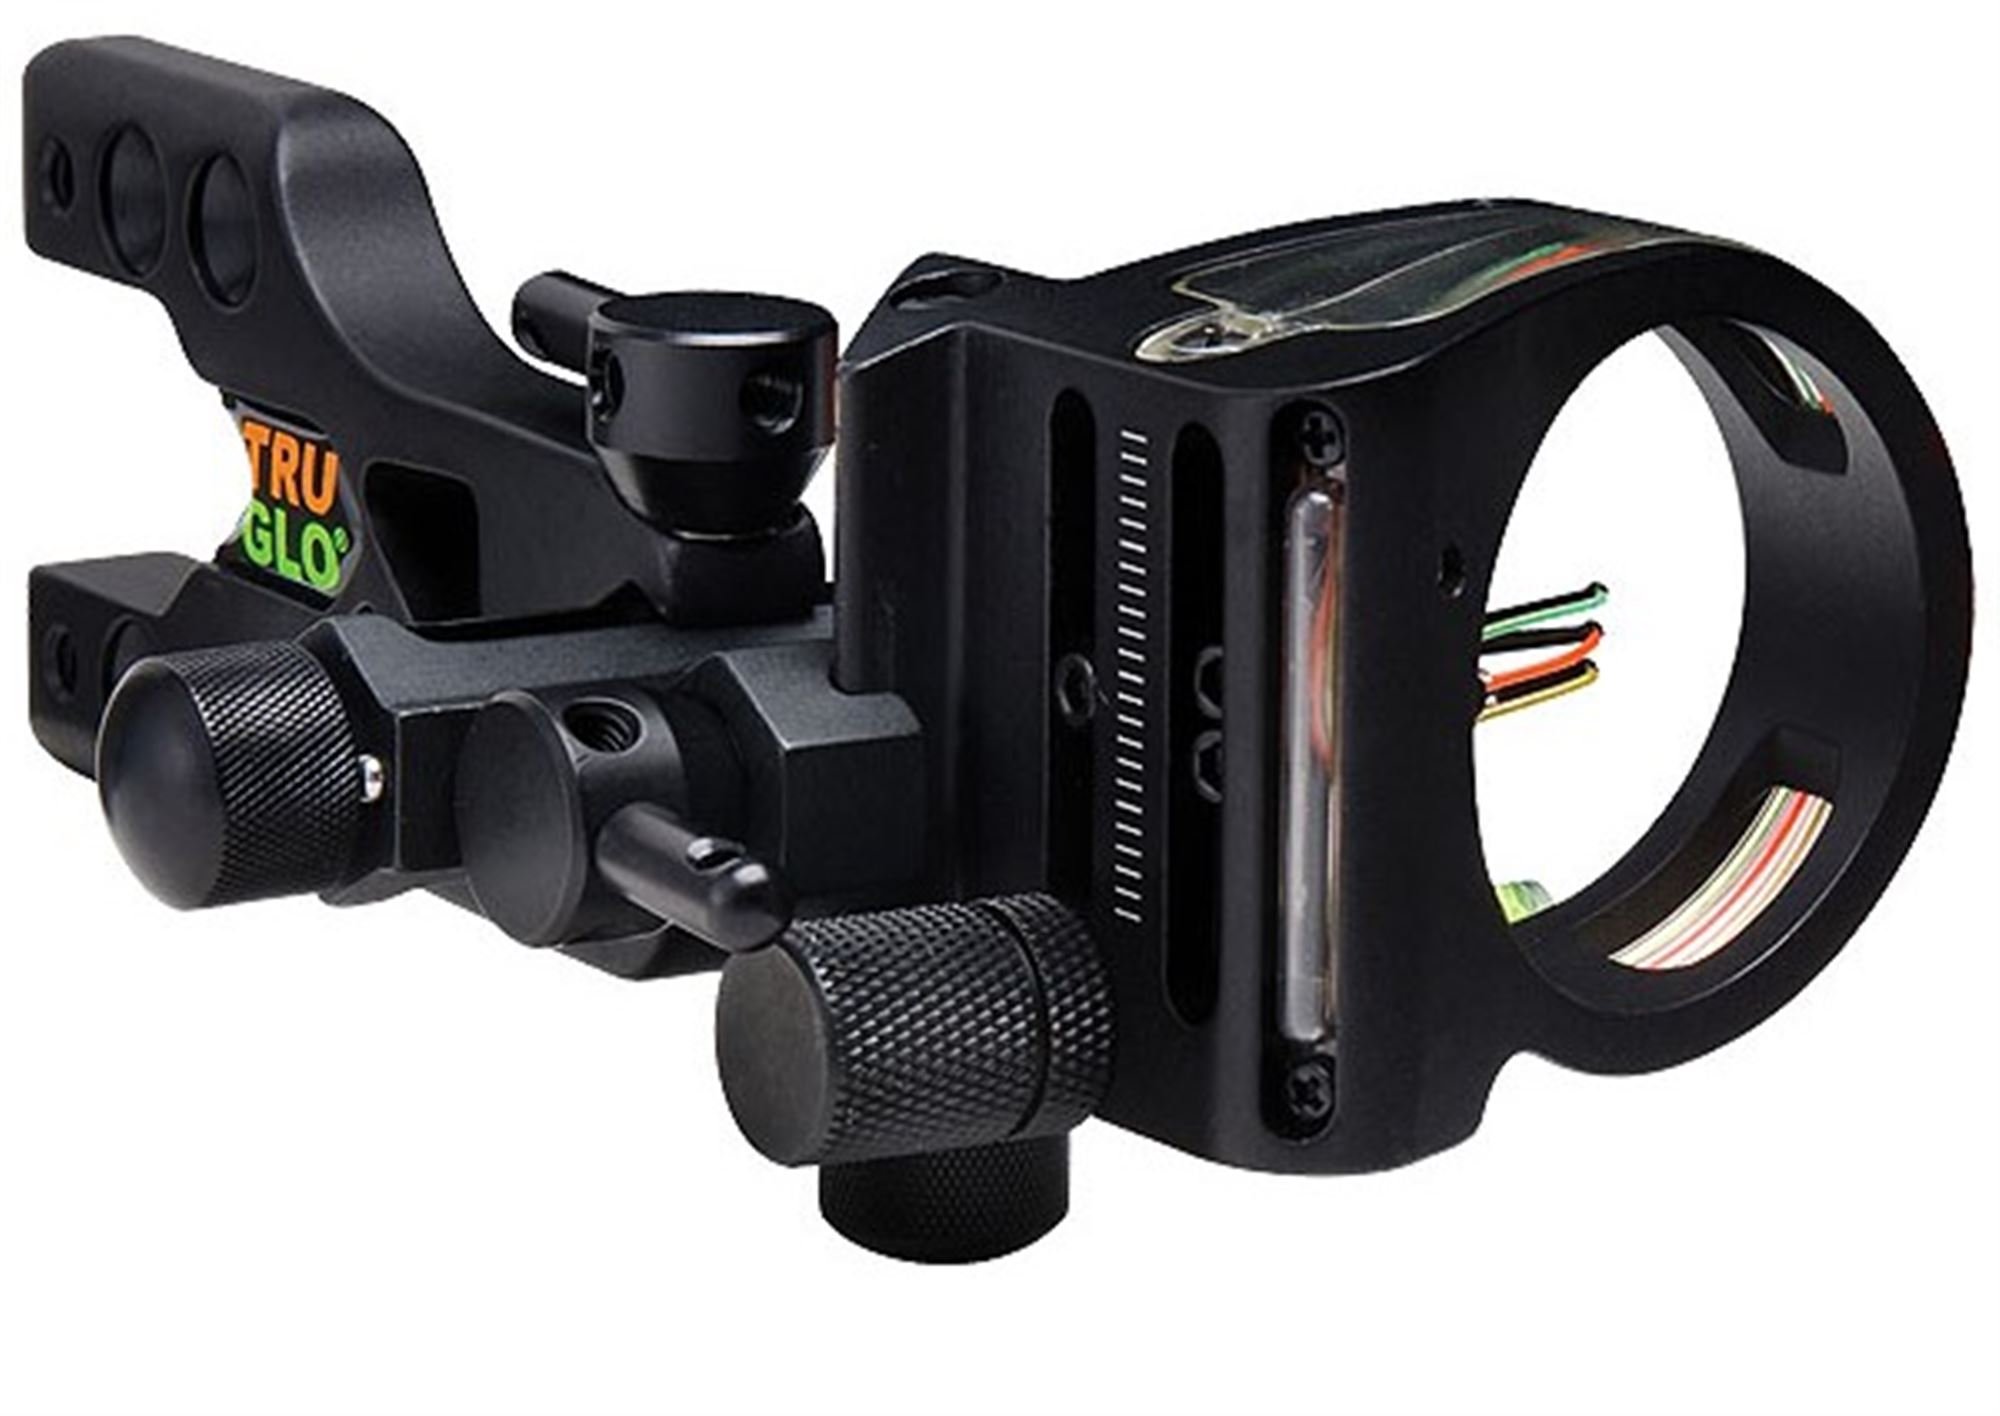 Truglo Tru-Site Xtreme Compact 3-Pin Sight Micro Black